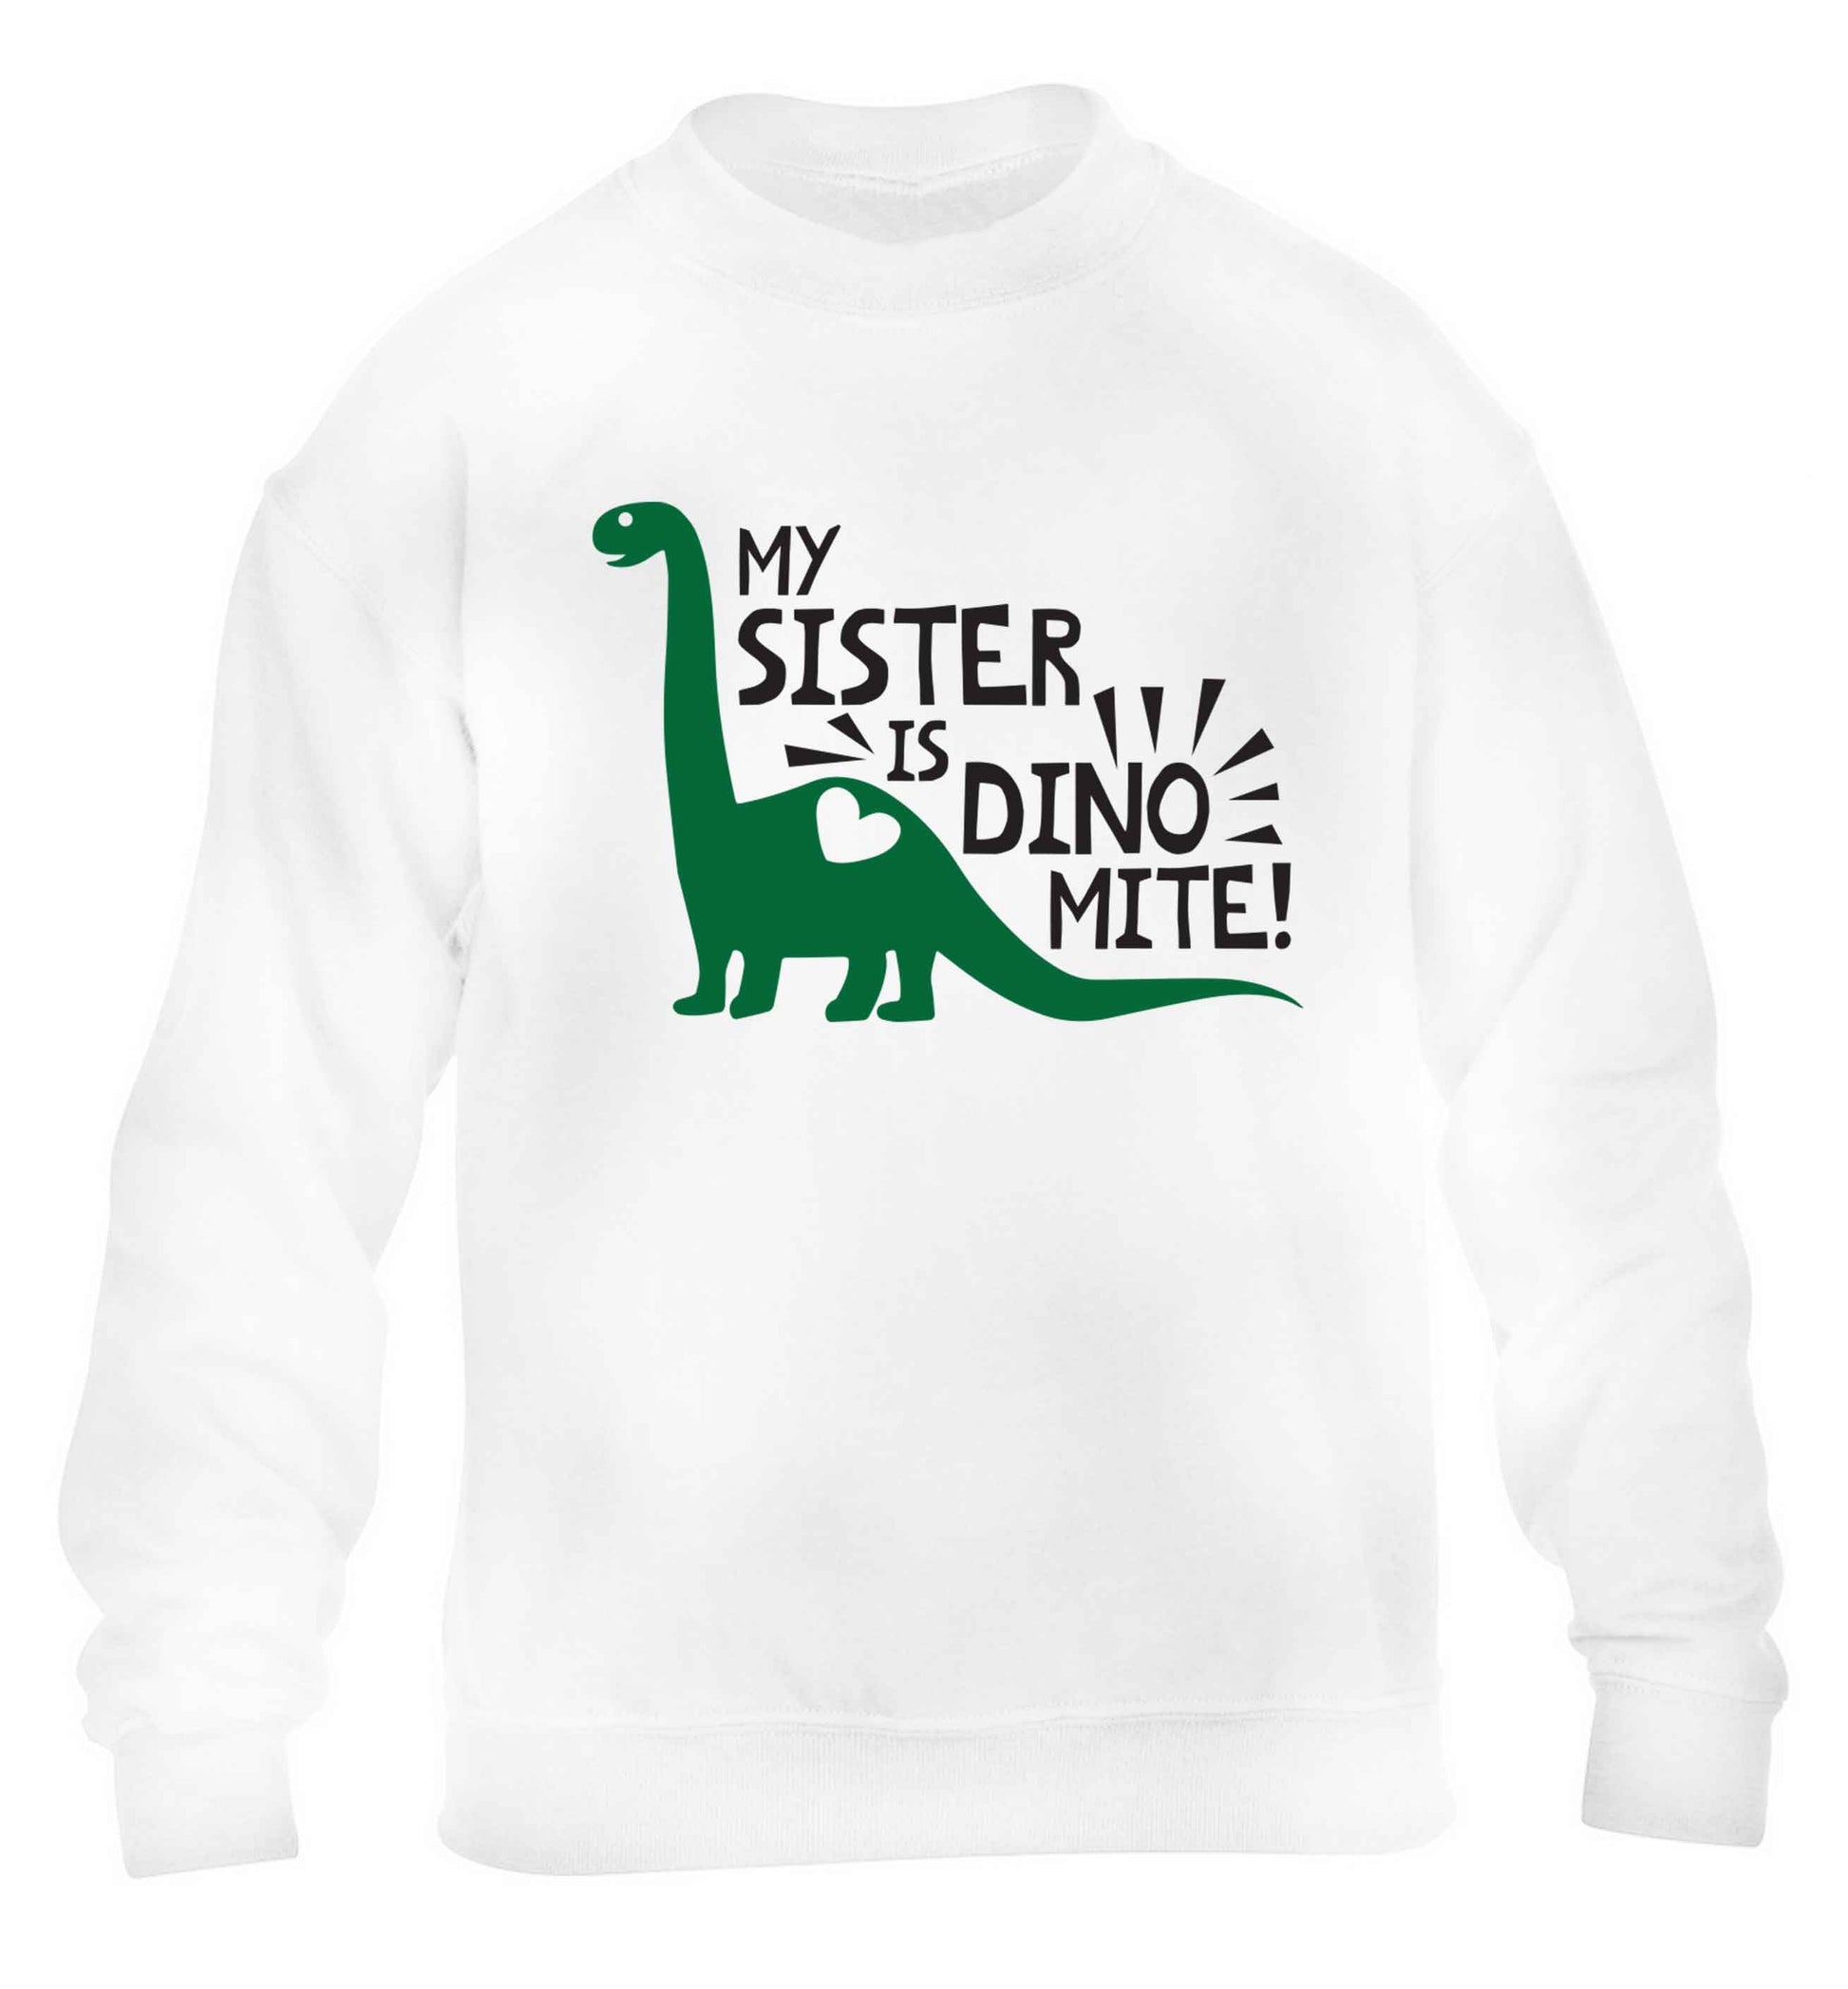 My sister is dinomite! children's white sweater 12-13 Years